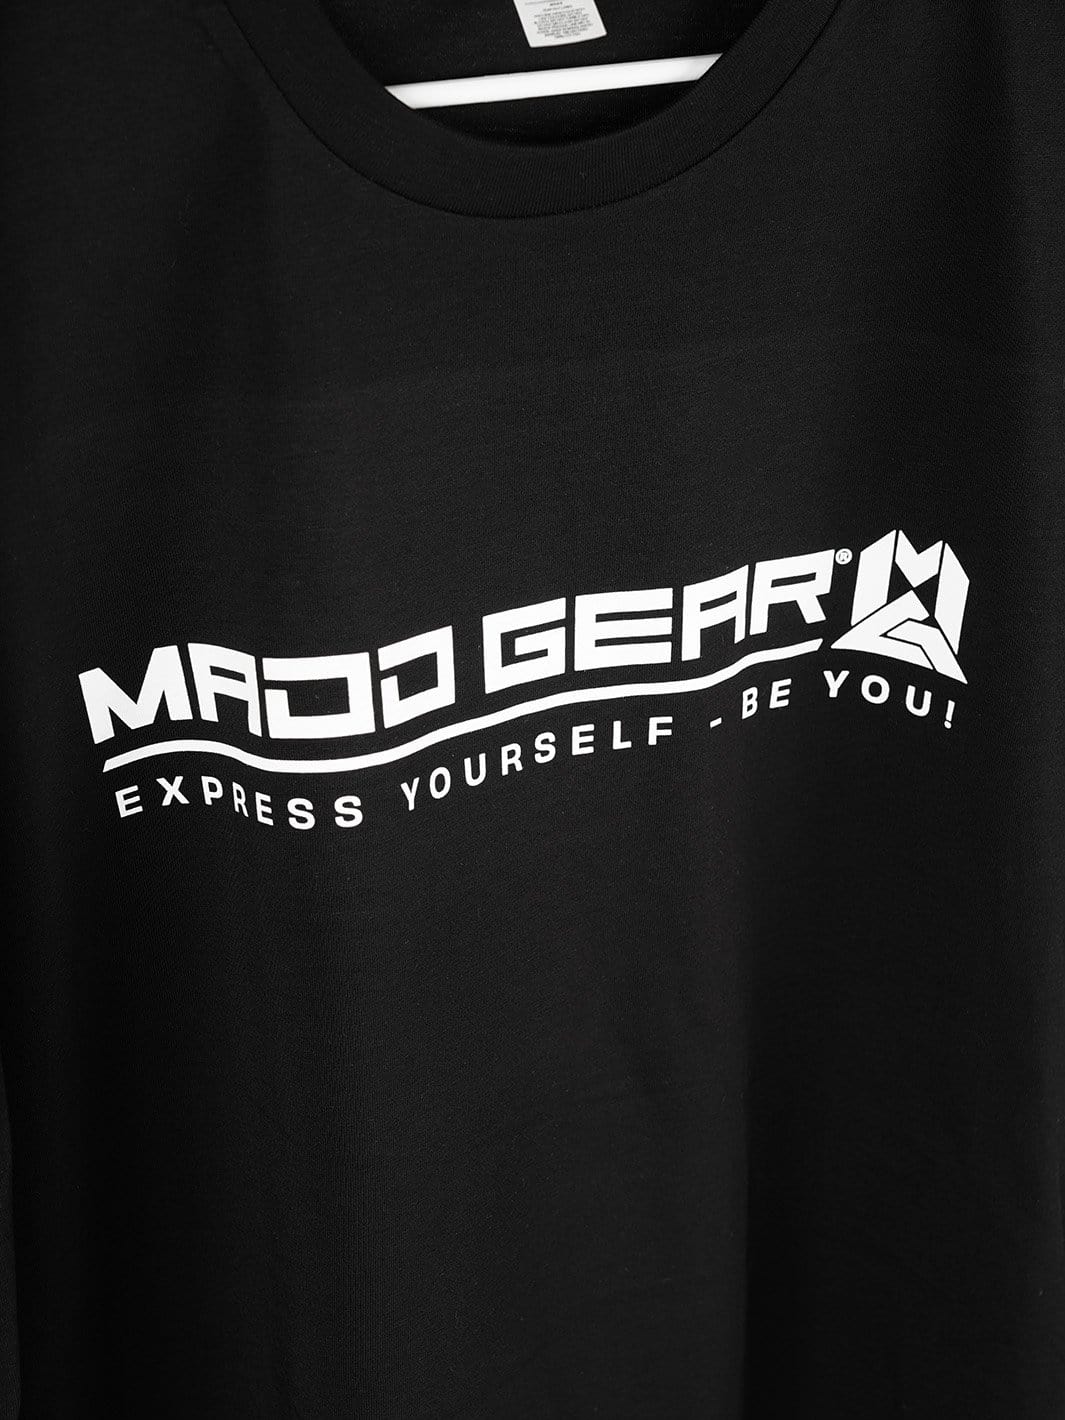 Madd Gear MGP Black Tee T Shirt TShirt T-Shirt Mens Womens Kids Children Skate Scooter Quality White